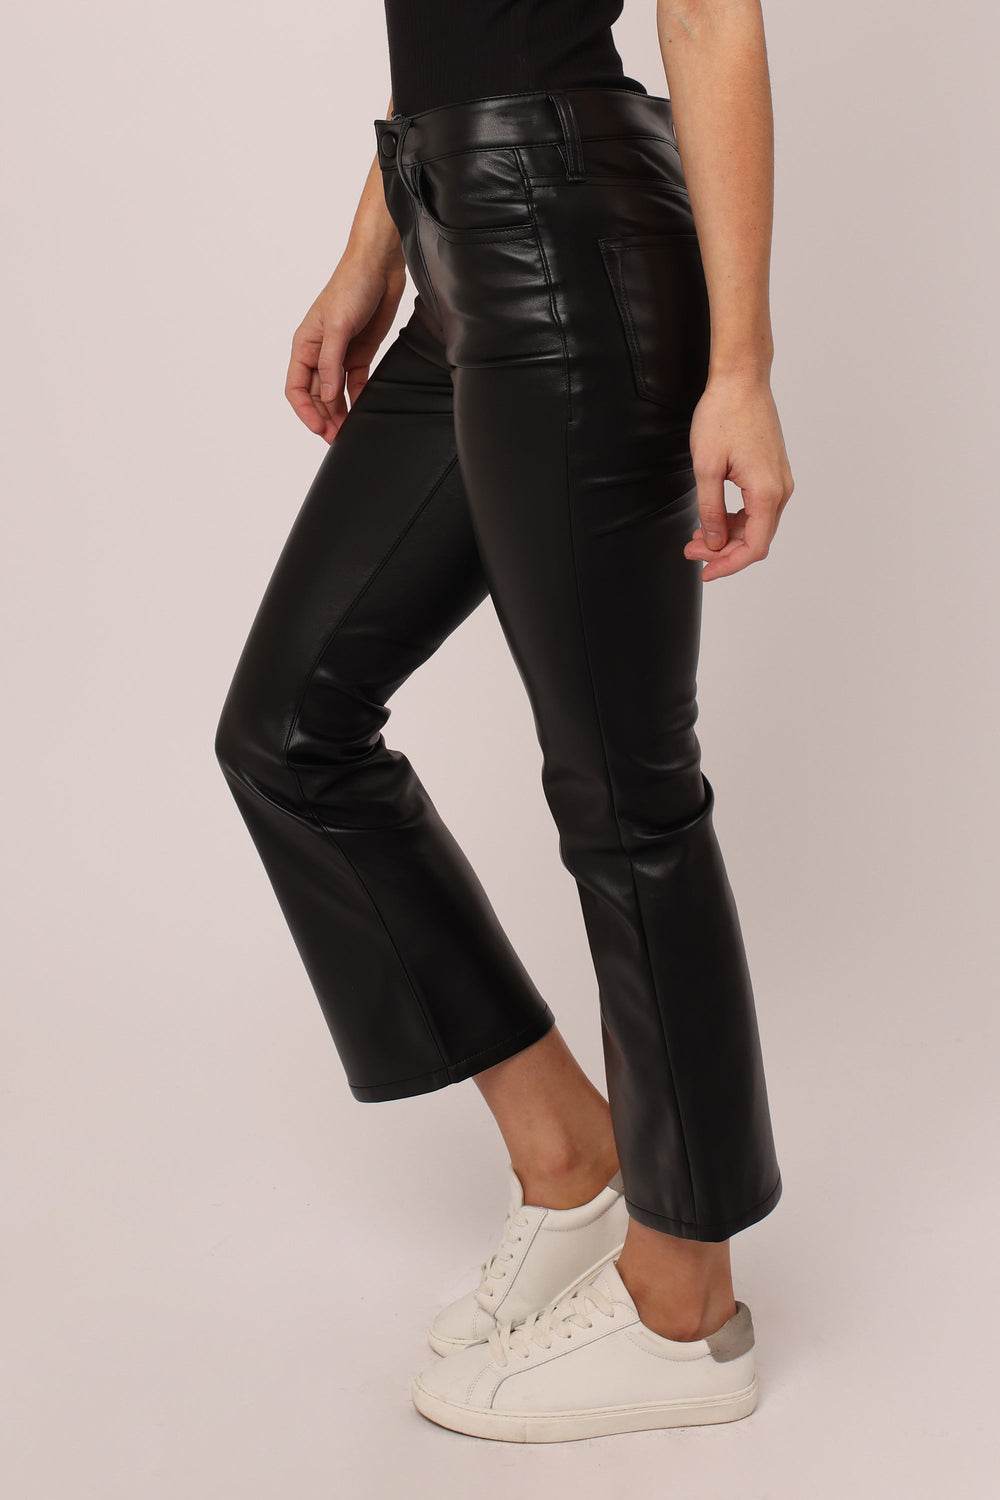 jeanne-super-high-rise-cropped-flare-pants-black-vegan-leather